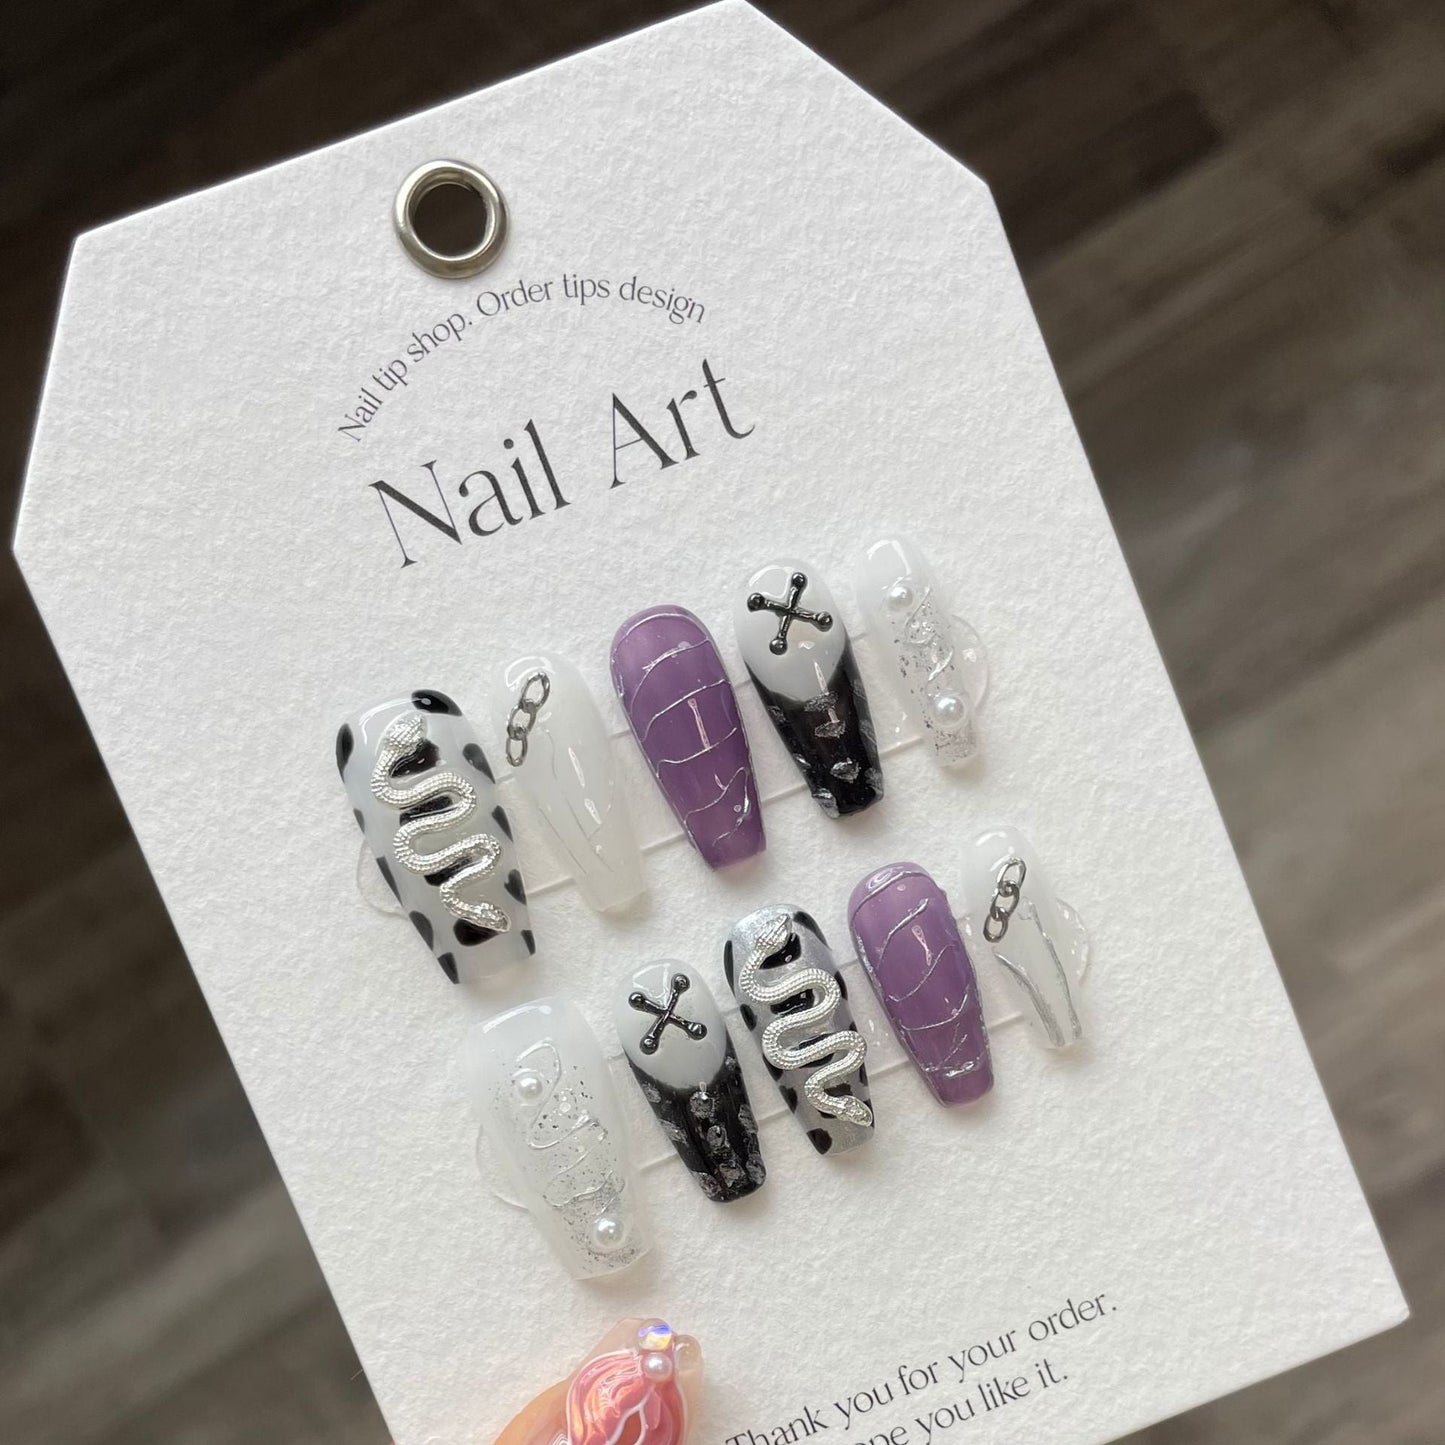 877 snake style press on nails 100% handmade false nails white black purple